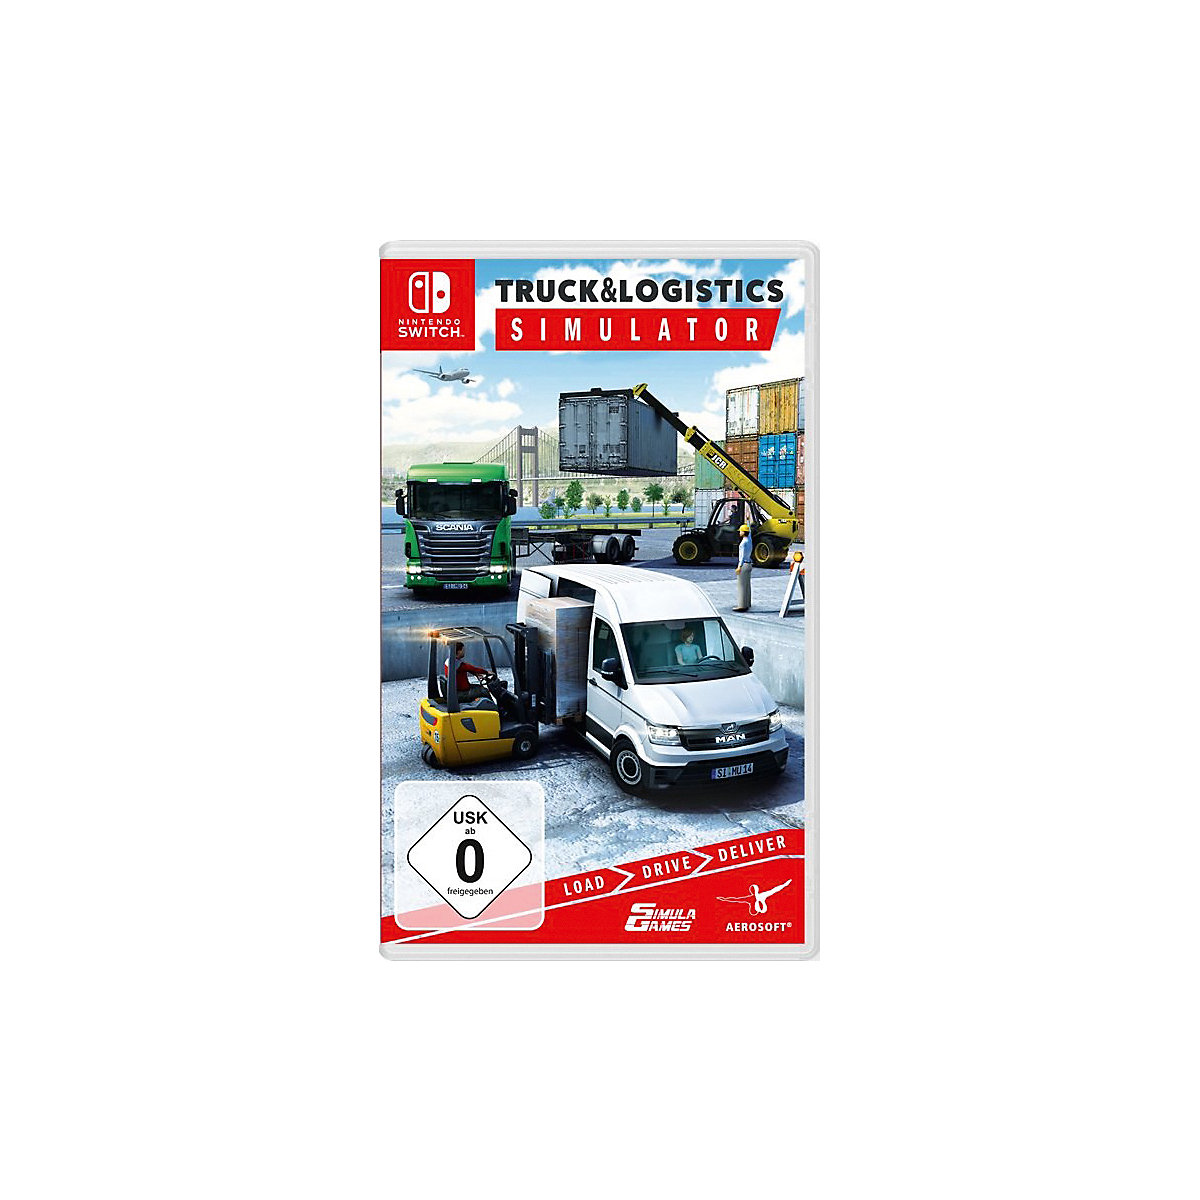 Nintendo Switch Truck & Logistics Simulator